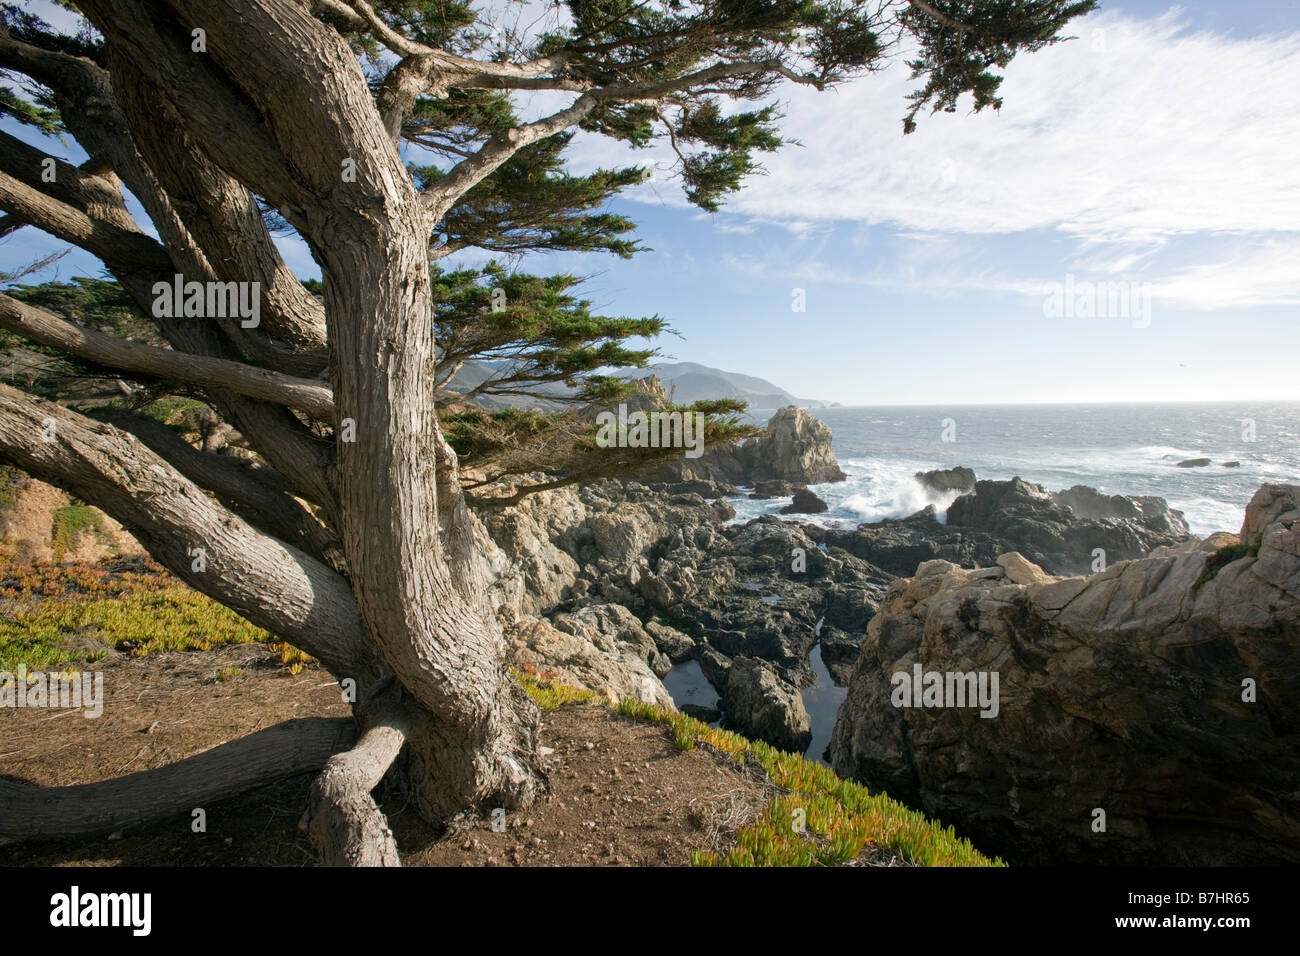 Monterey Cypress tree, Pacific Ocean and coast, Rocky Point, between Big Sur & Carmel, California, USA Stock Photo